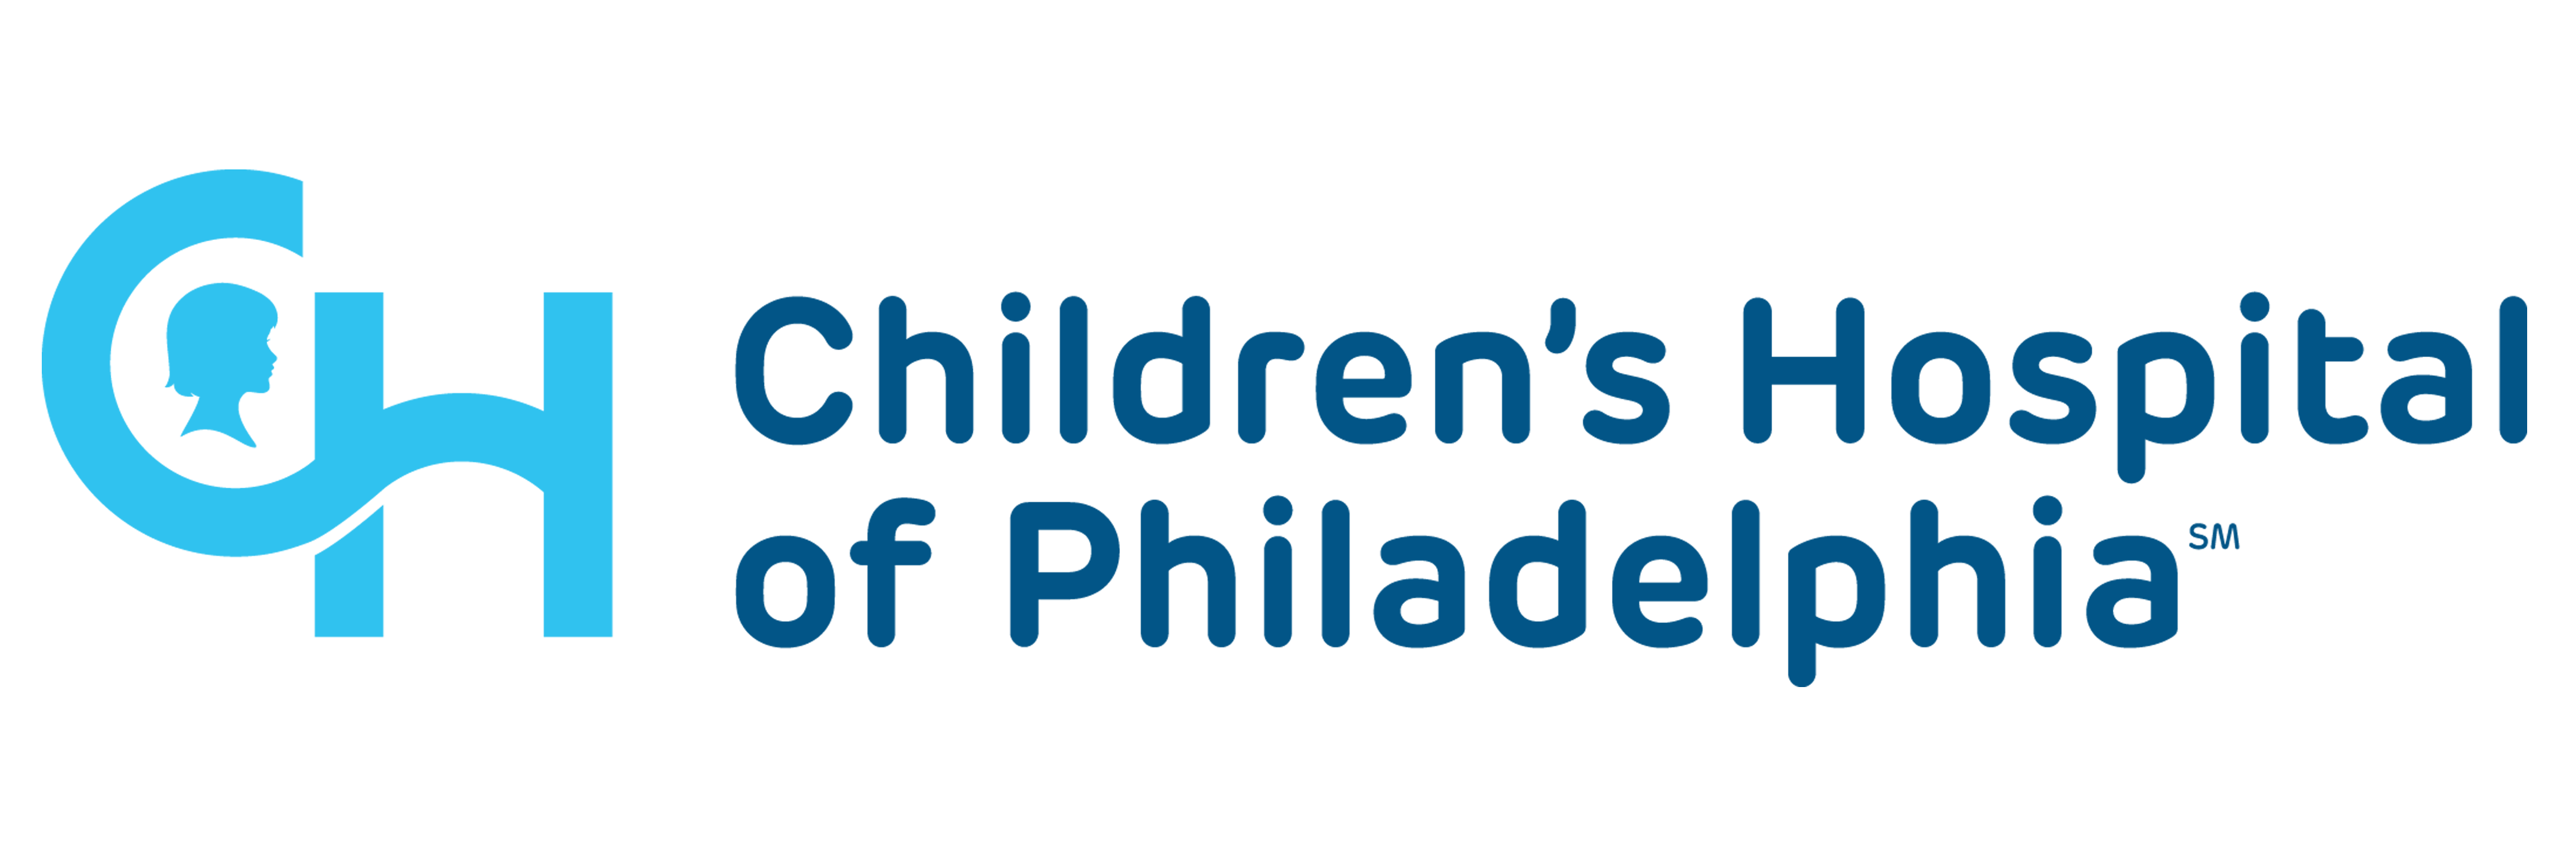 Childrens Hospital of Philadeplphia